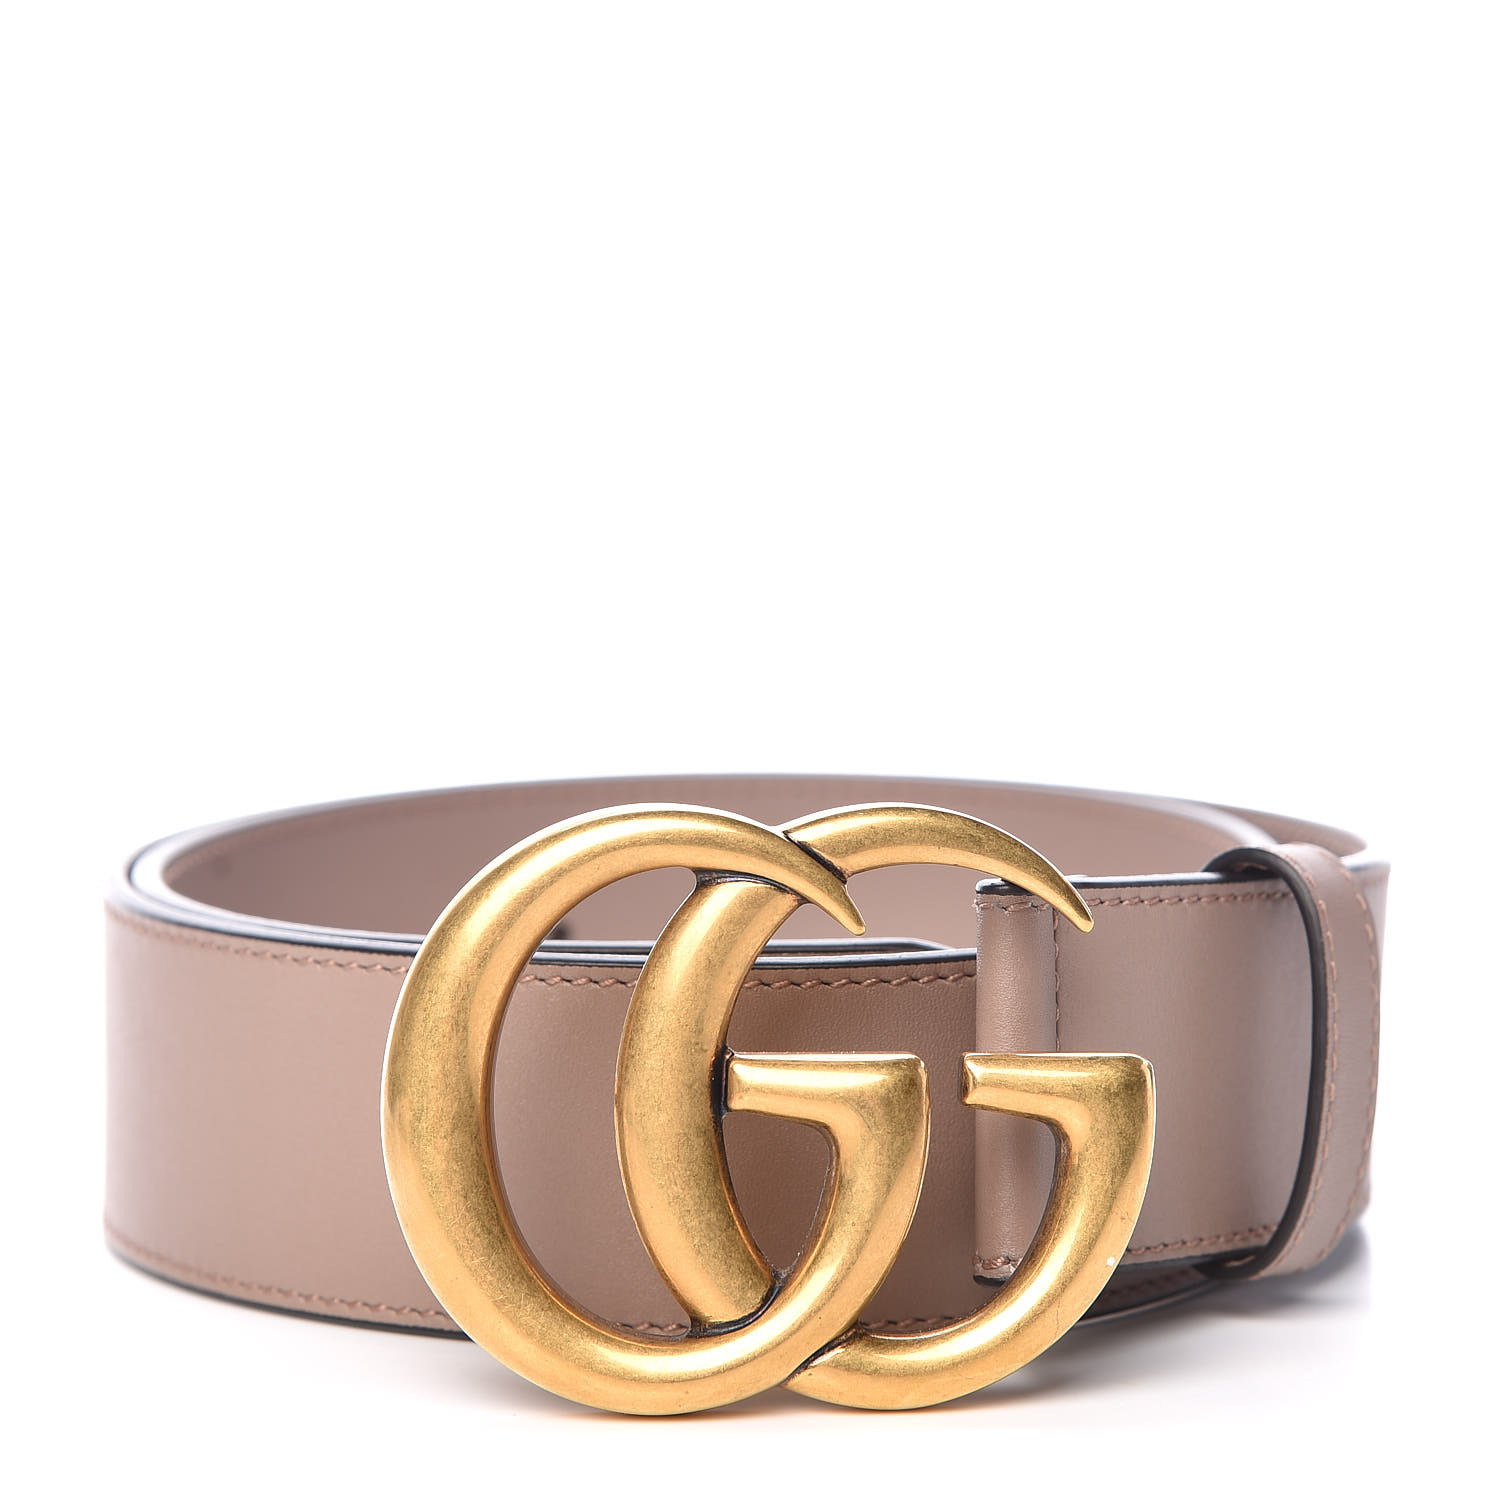 gucci rose gold belt